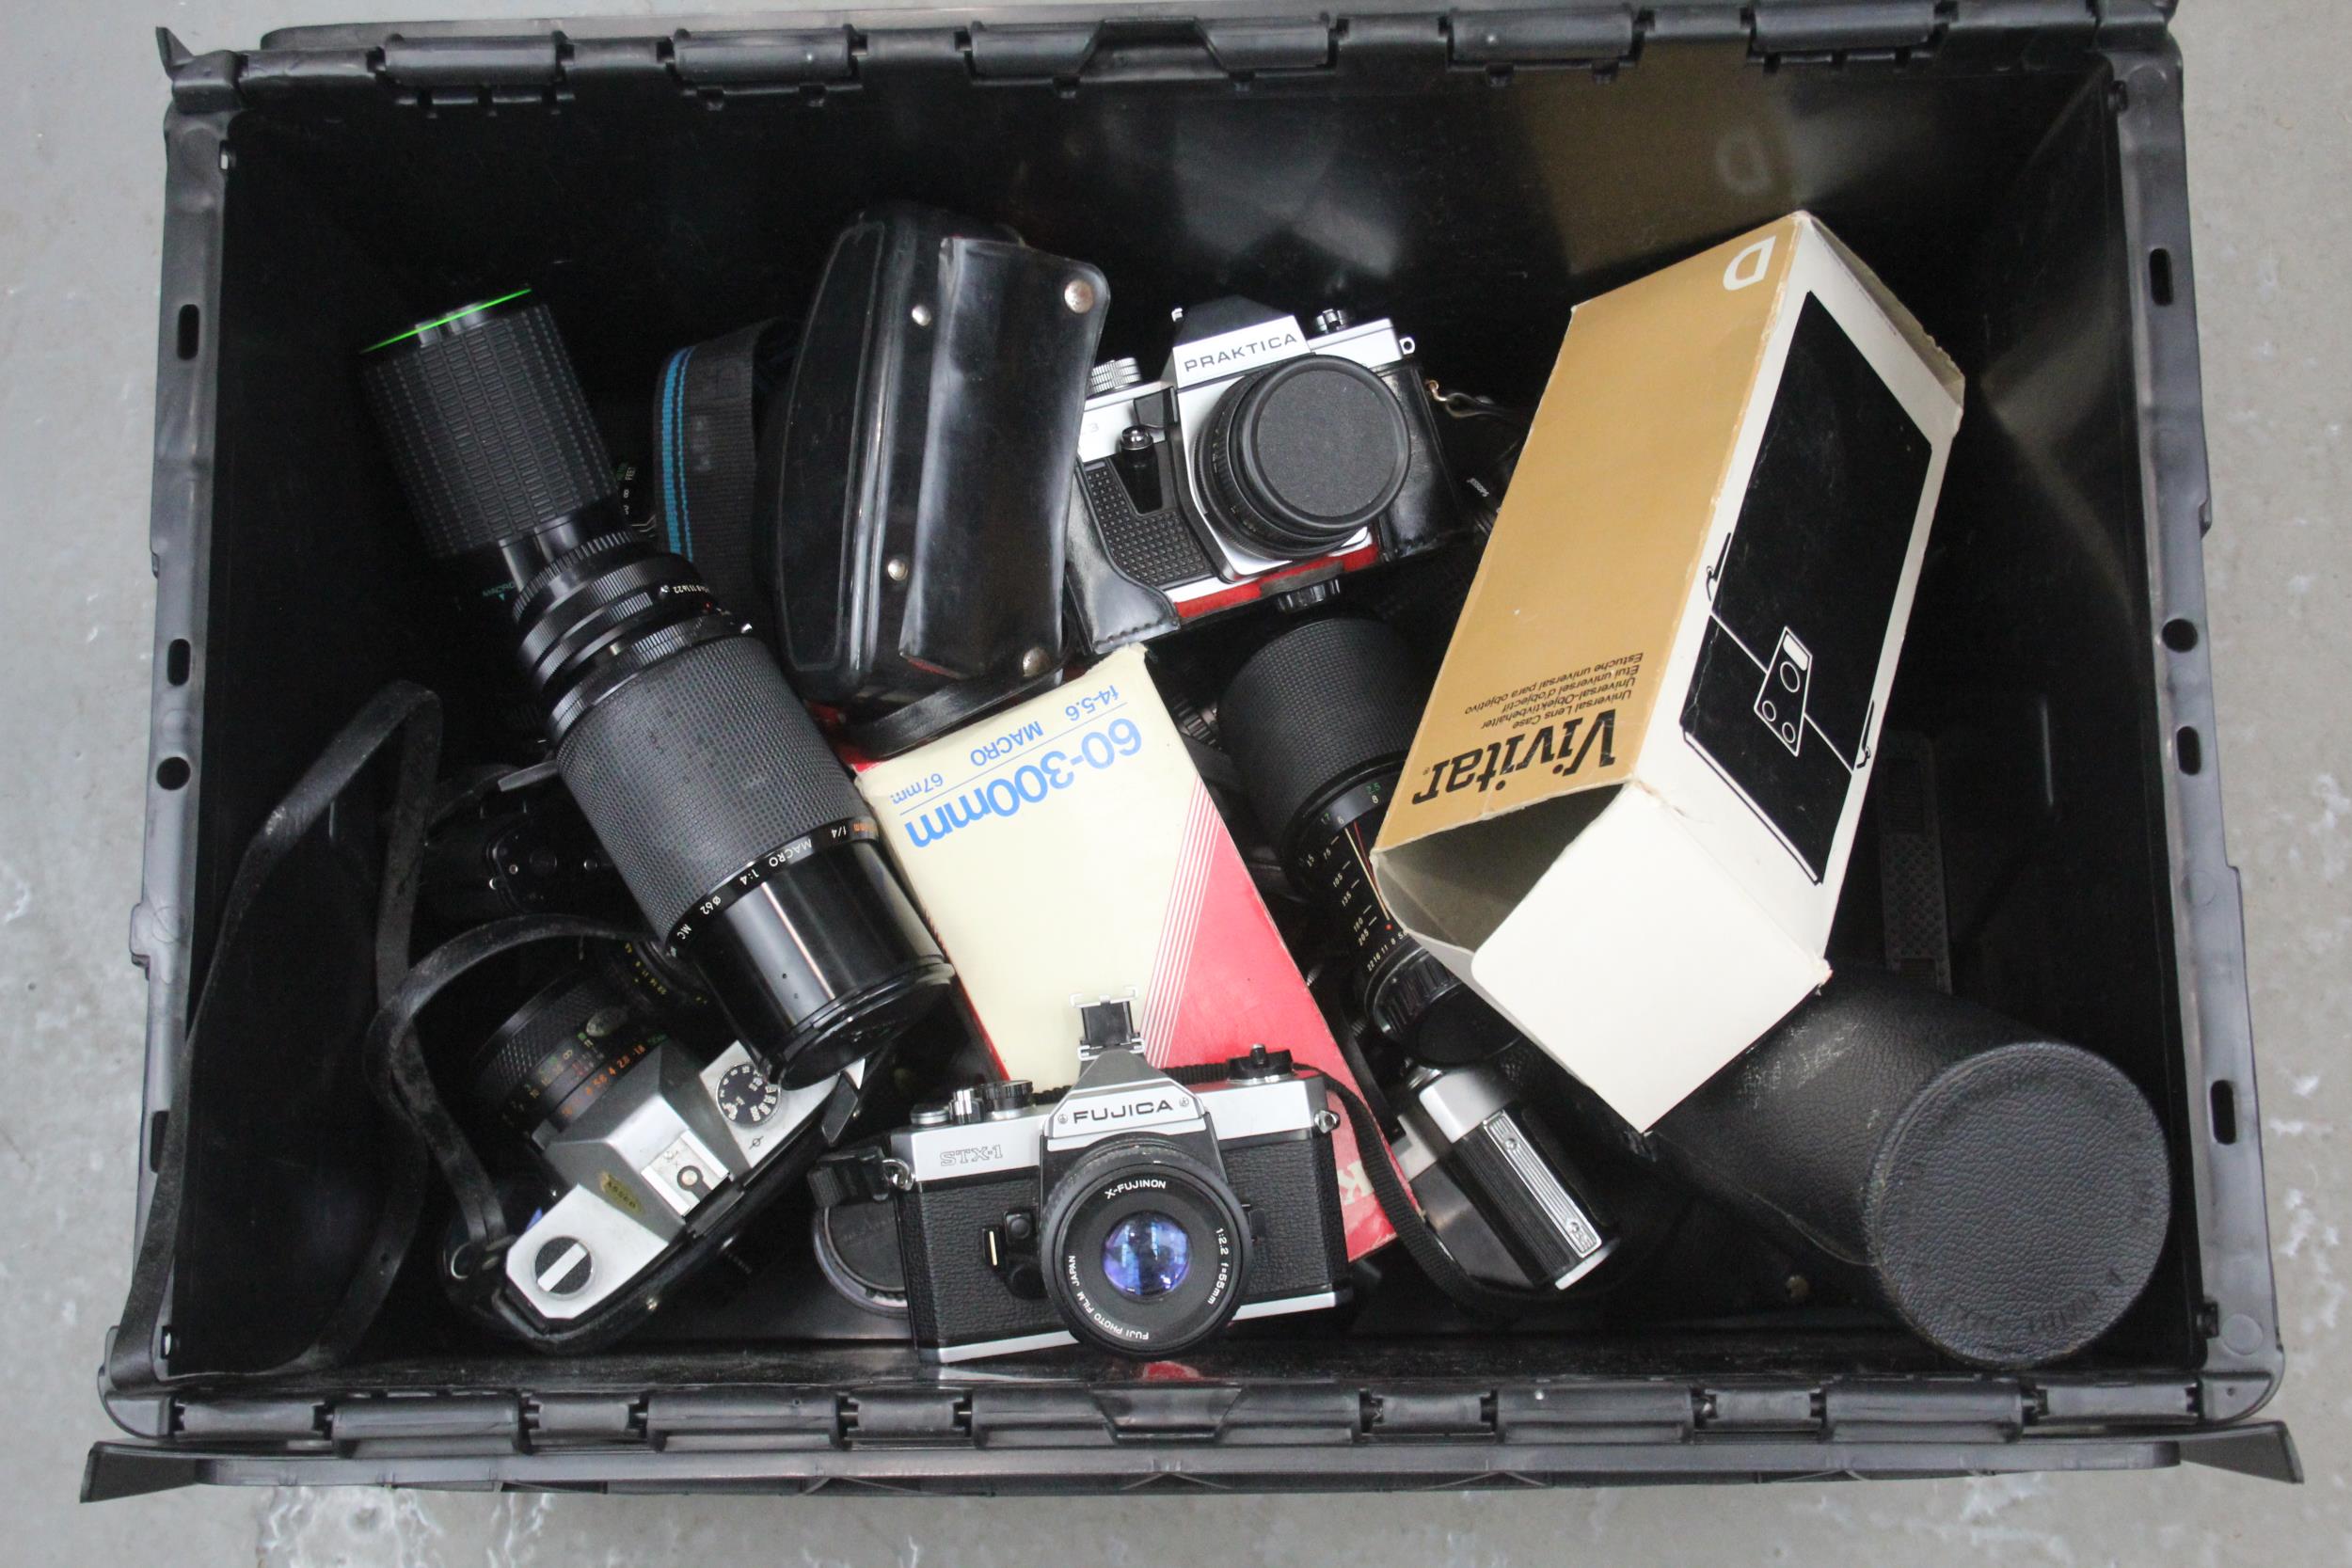 SLR Vintage Film Cameras Inc Canon, Pentax, Minolta Etc w/ Misc Lenses Job Lot - SLR Vintage Film